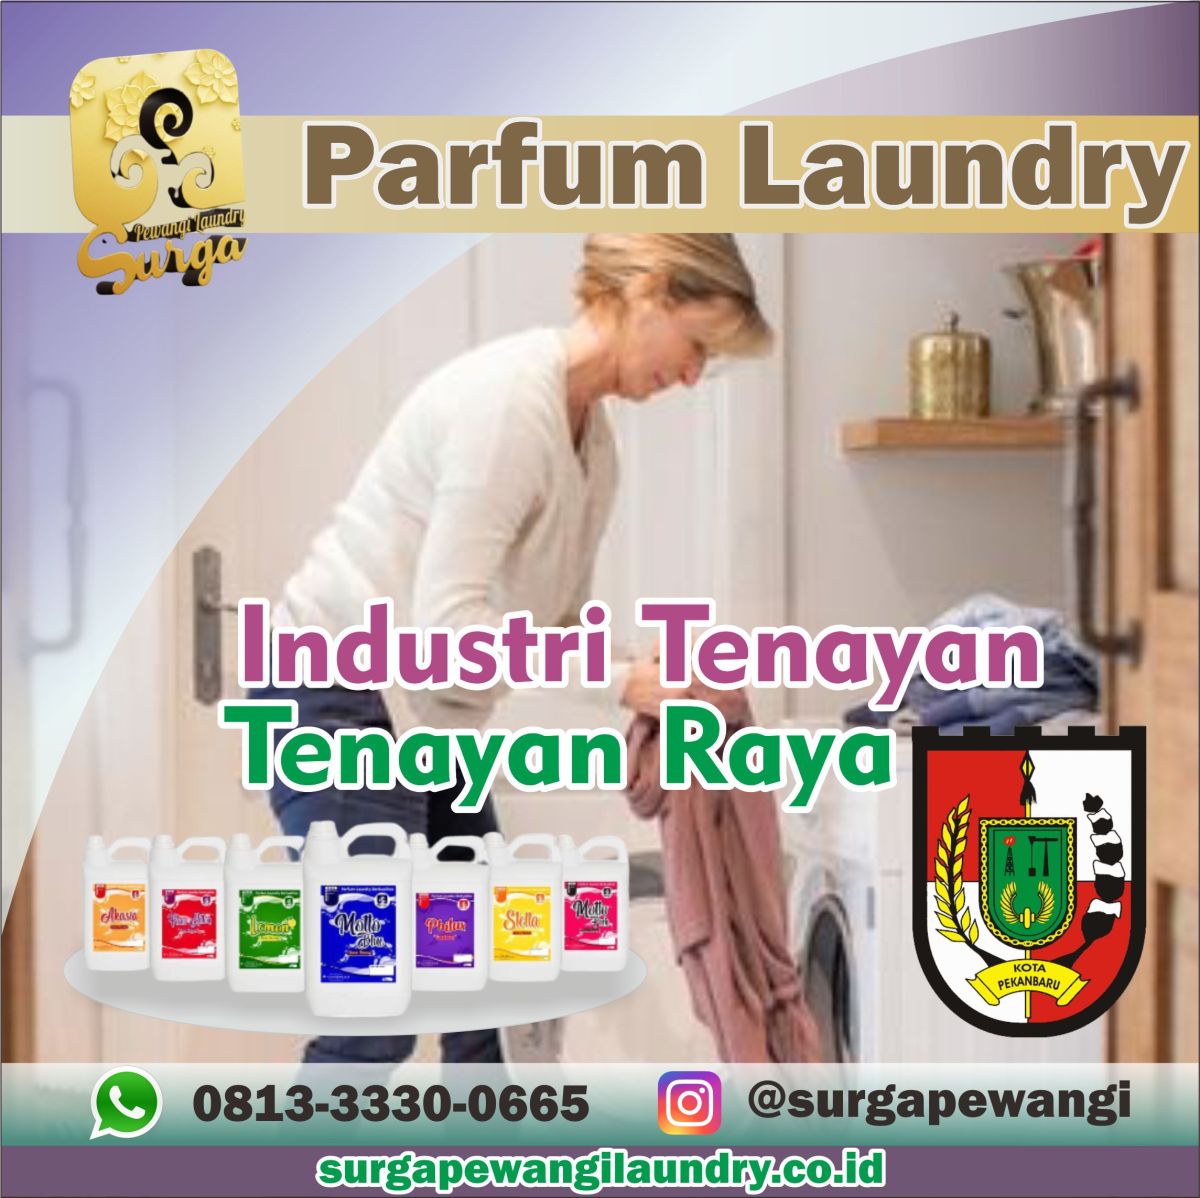 Parfum Laundry Industri Tenayan, Tenayan Raya